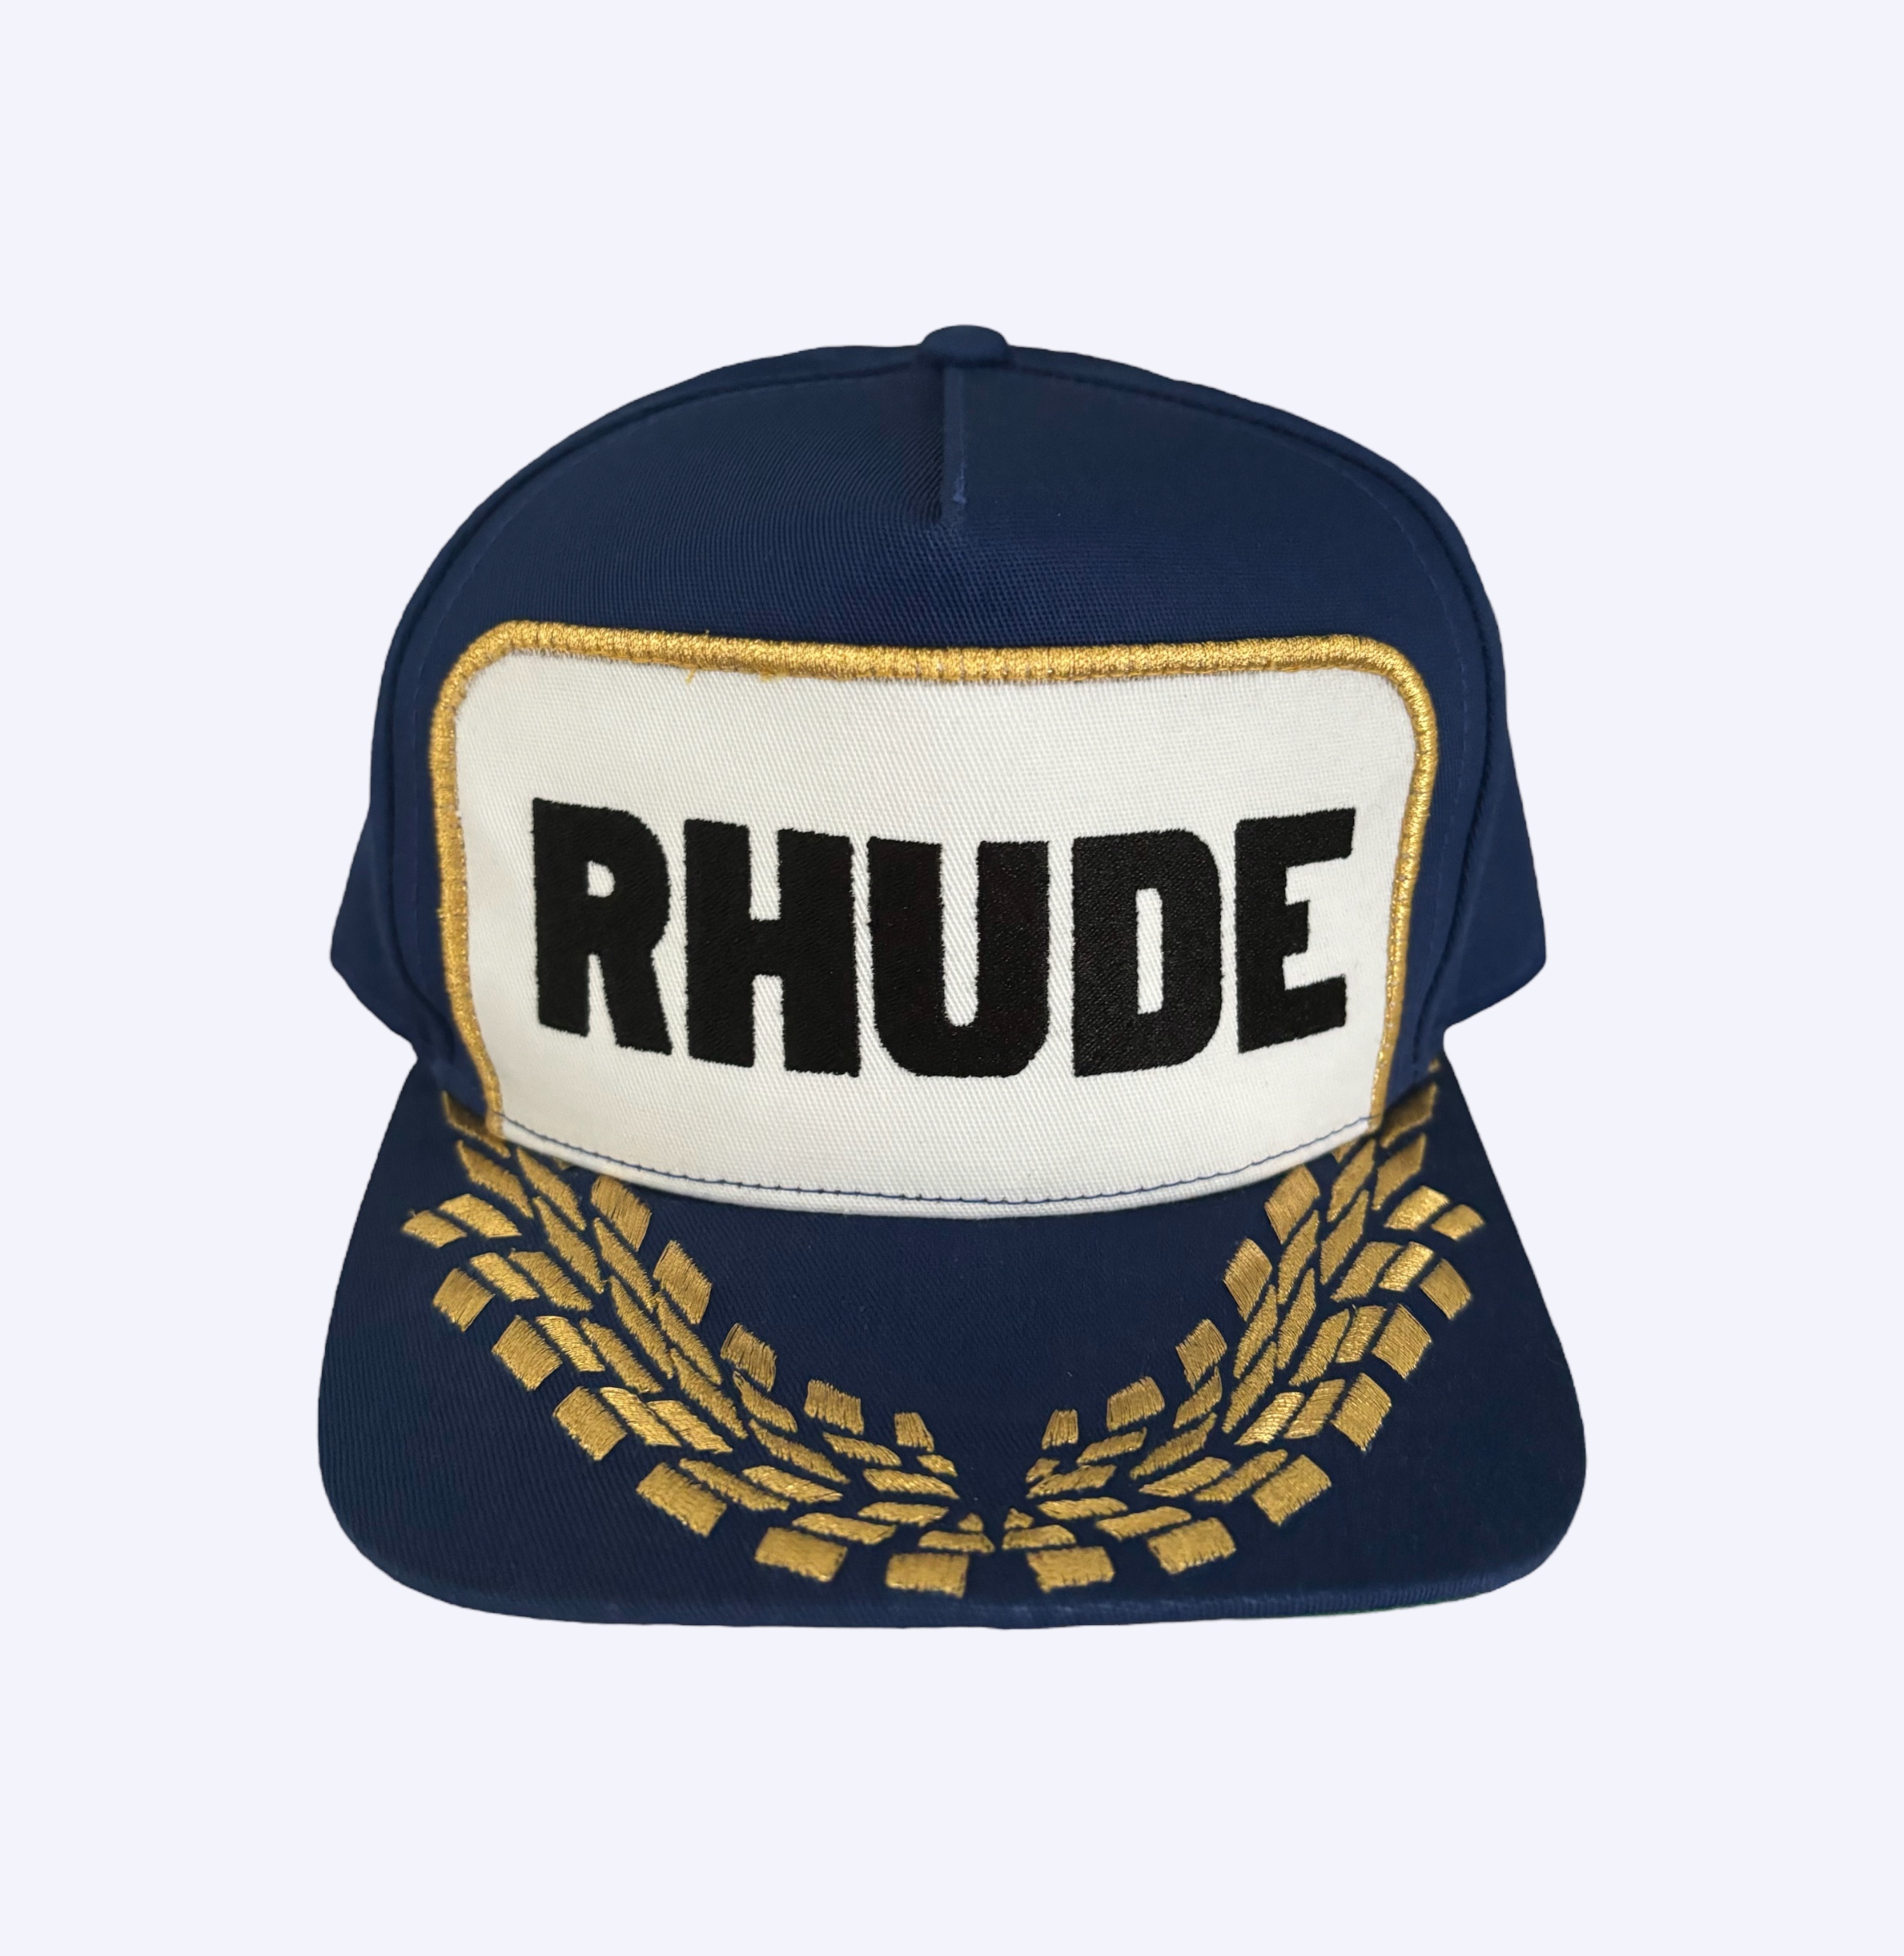 Rhude “Racing F1 Podium” Hat